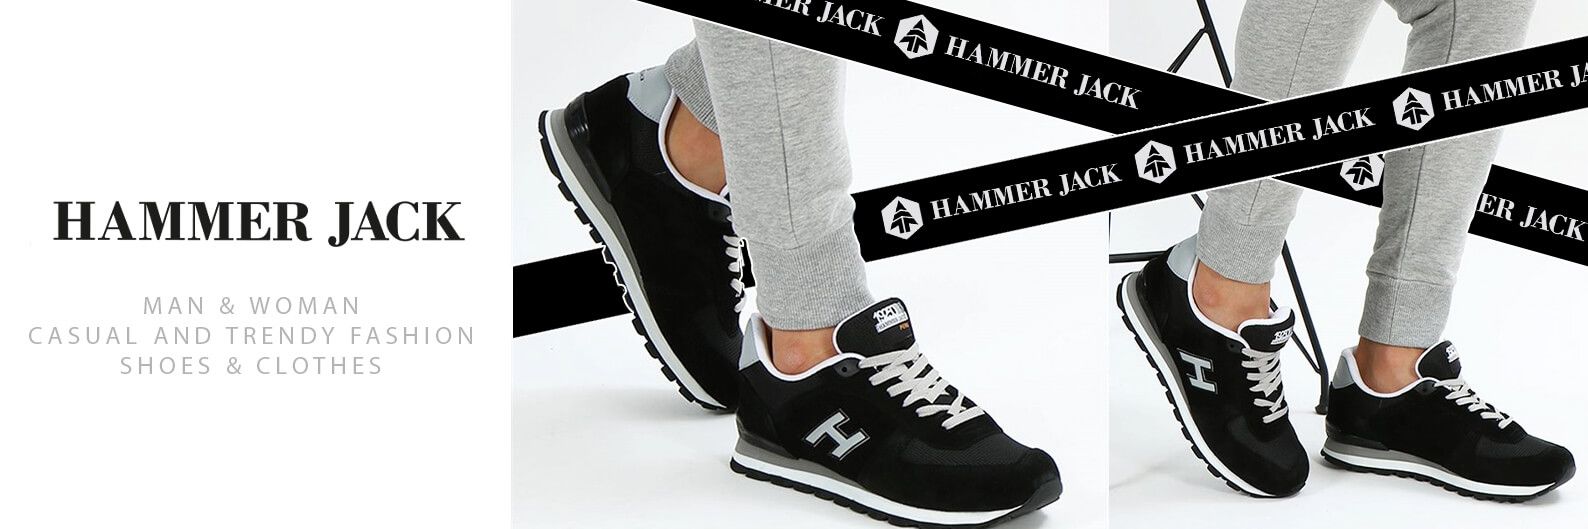 Euromart - Hammer Jack